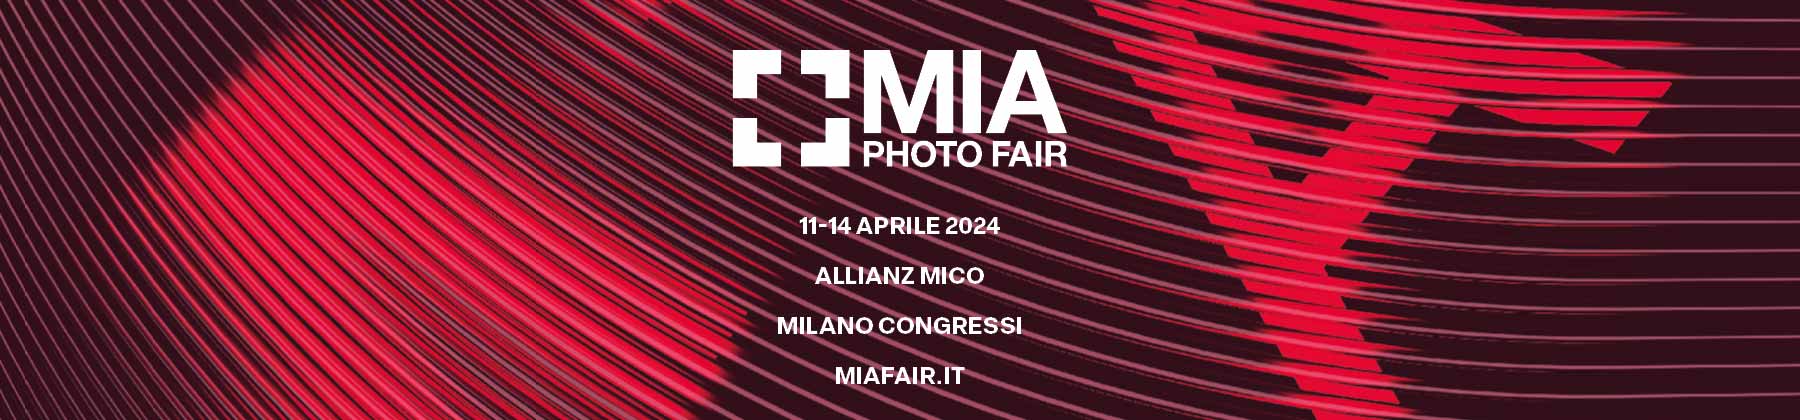 MIA Photo Fair - 11-14 aprile 2024 Milano